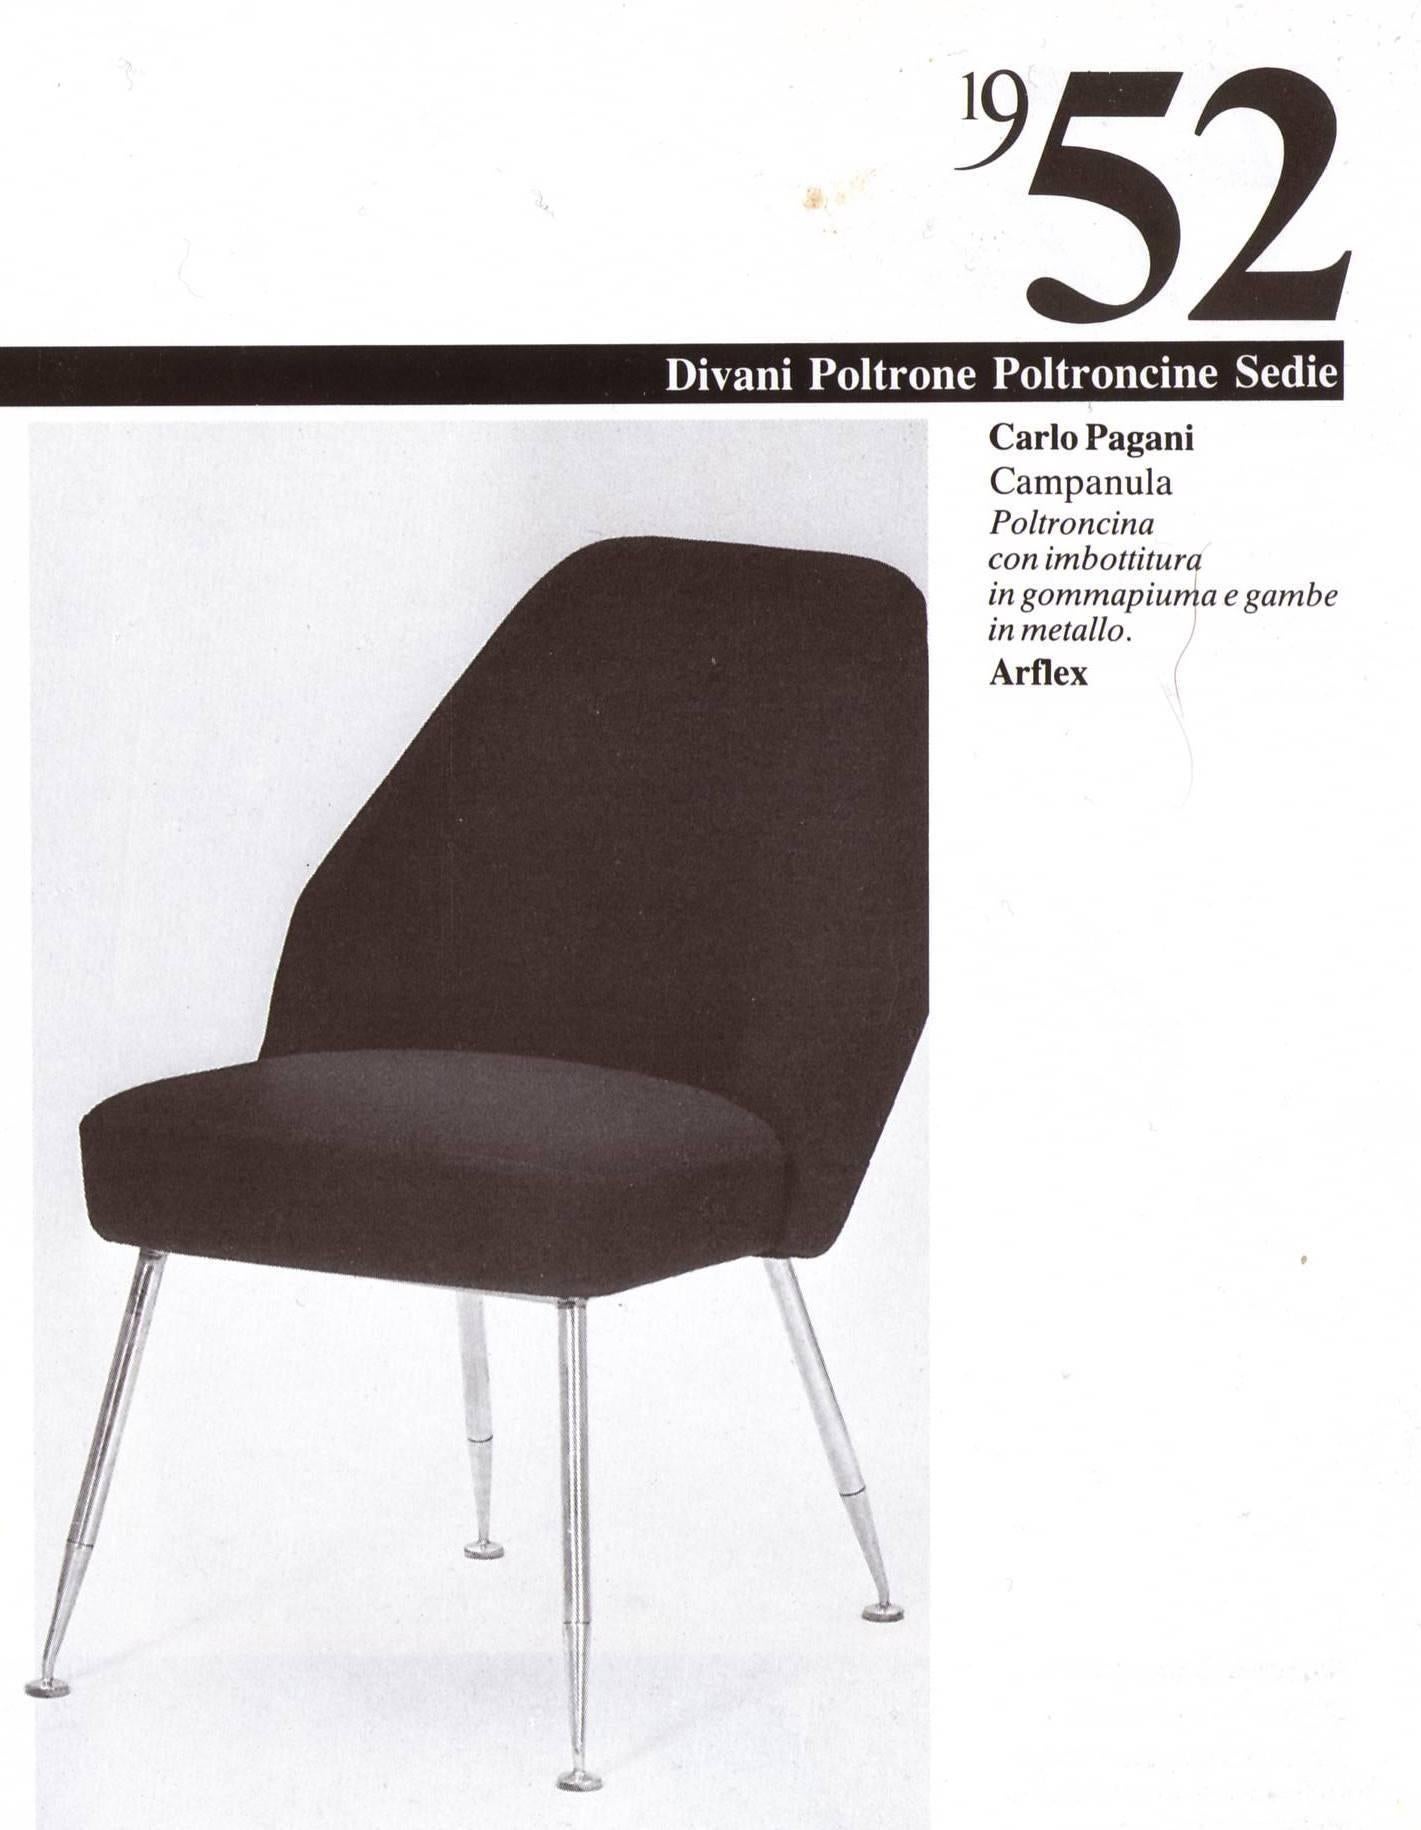 8 Brass Leg Chairs by Pagani, Partner of Gio Ponti & Lina Bo Bardi, 1952, Arflex 3